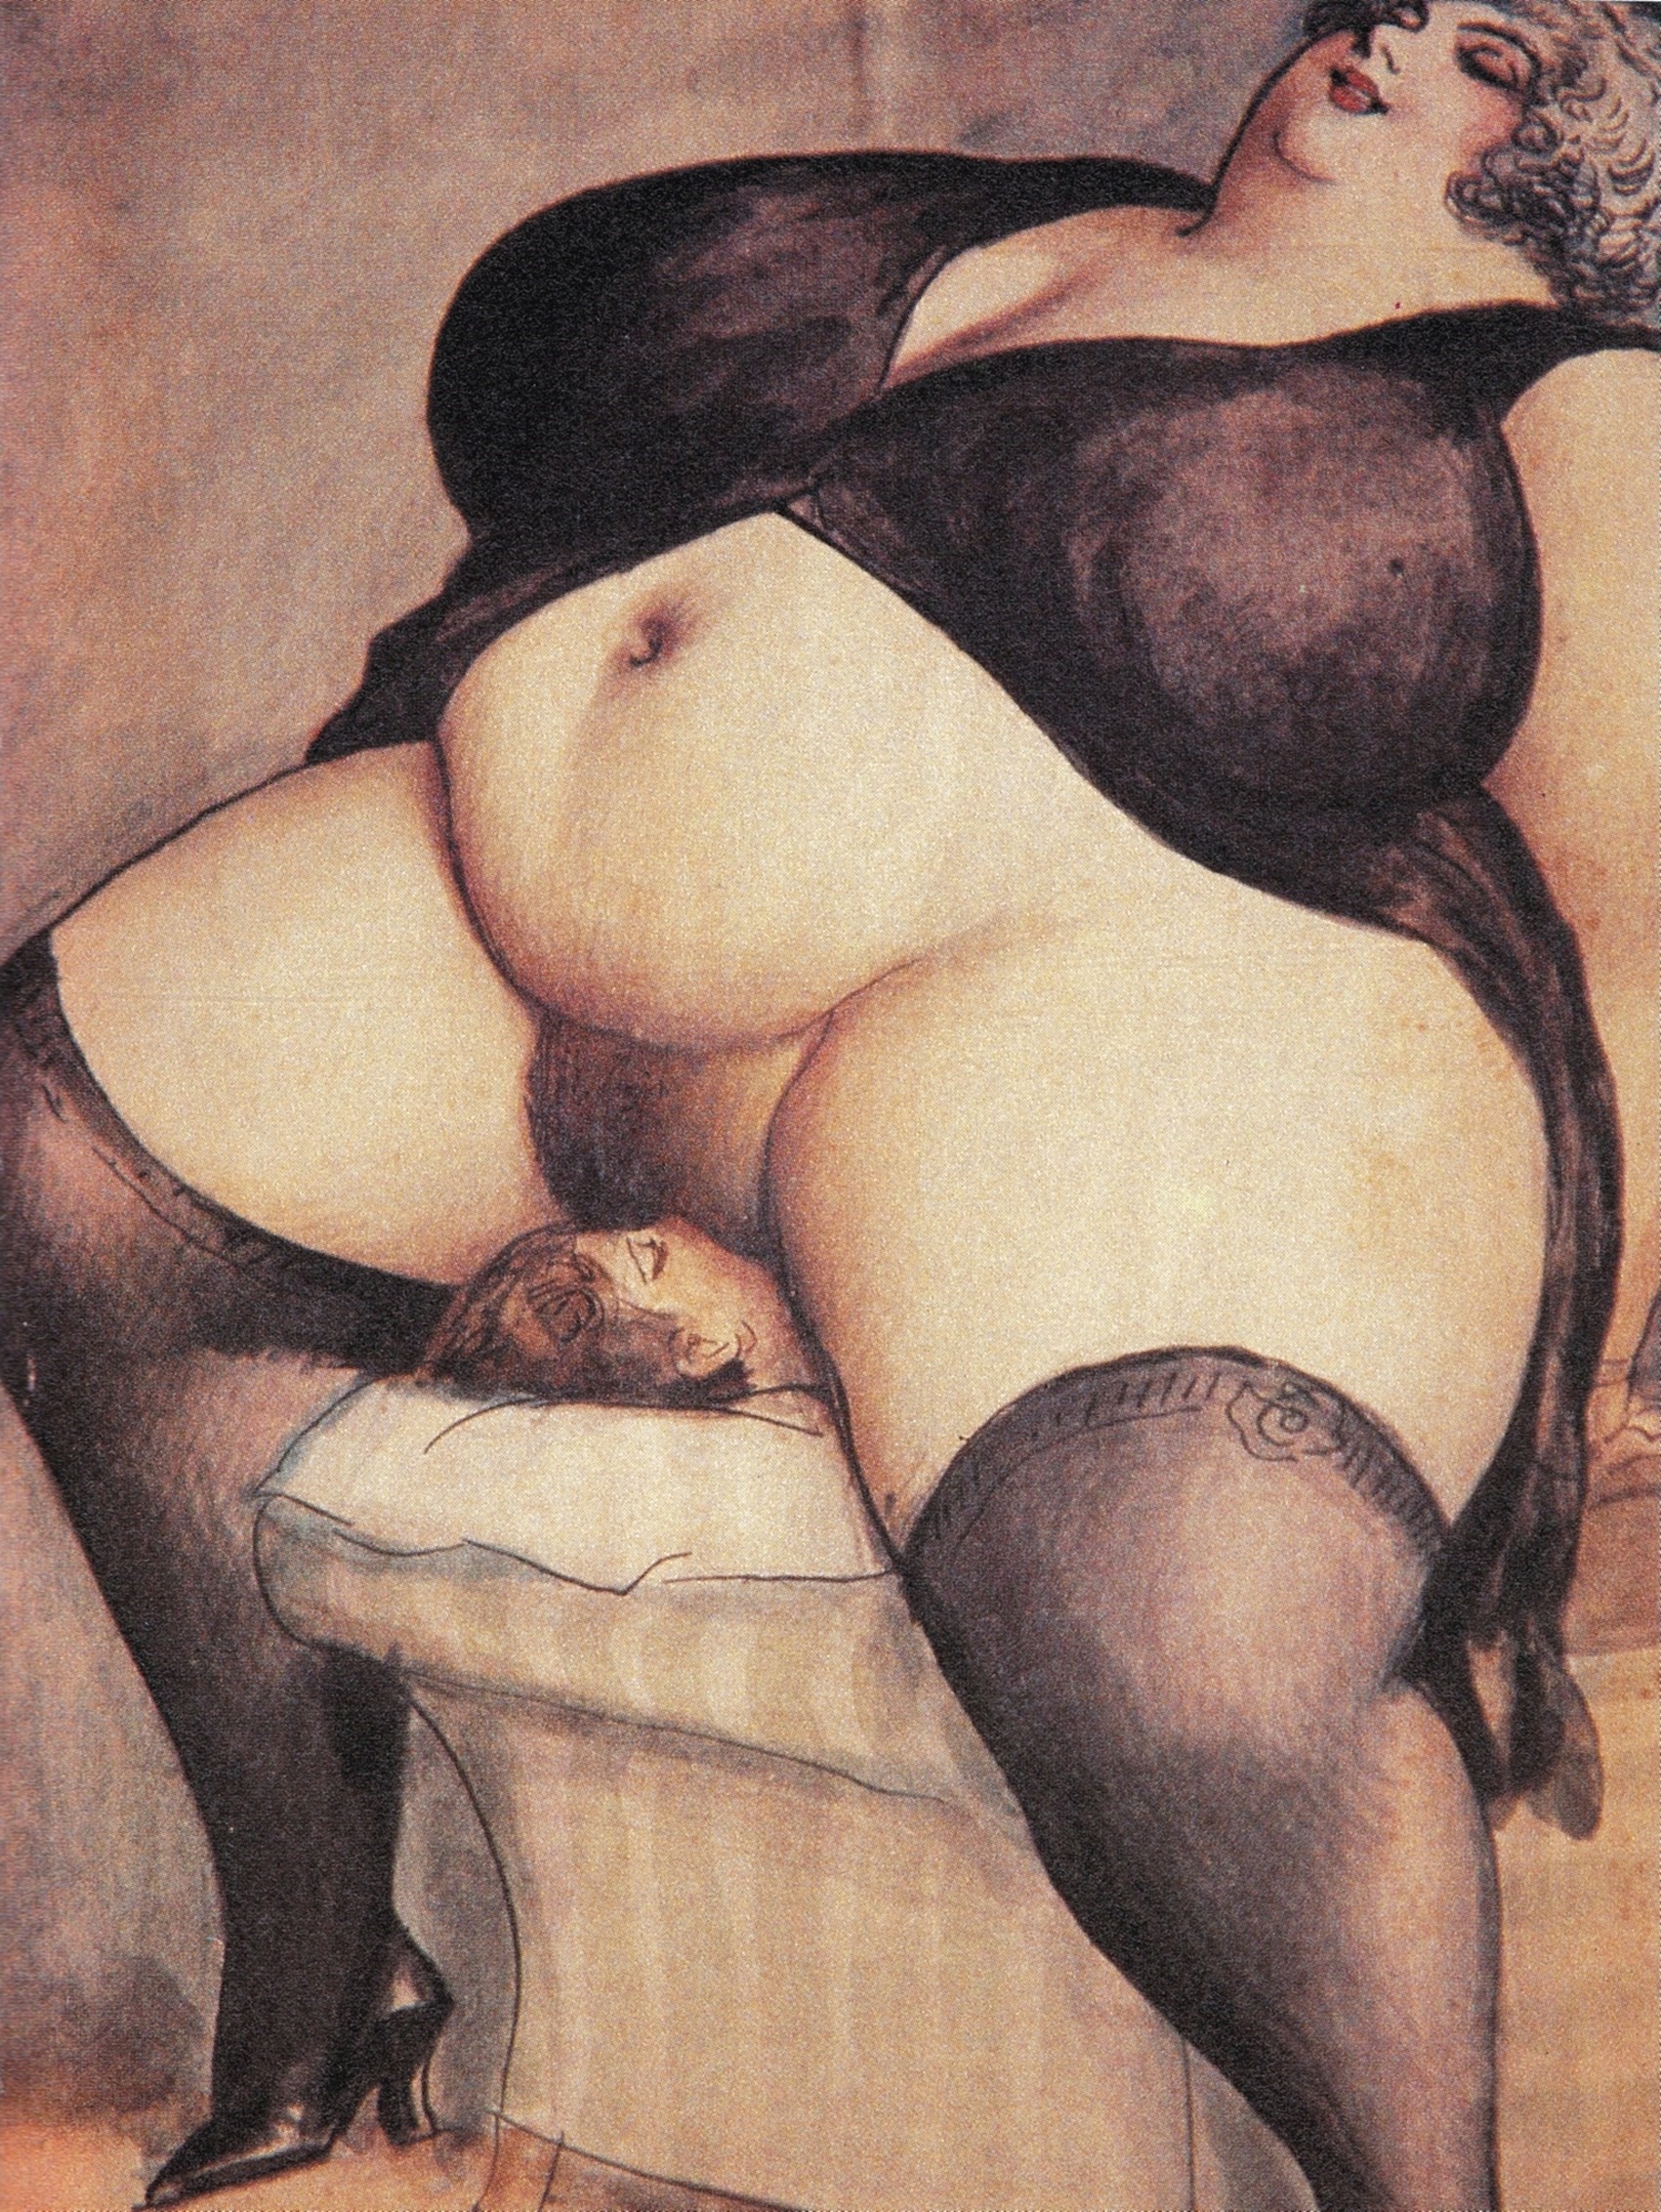 bozena kowalski recommends Vintage Erotic Images